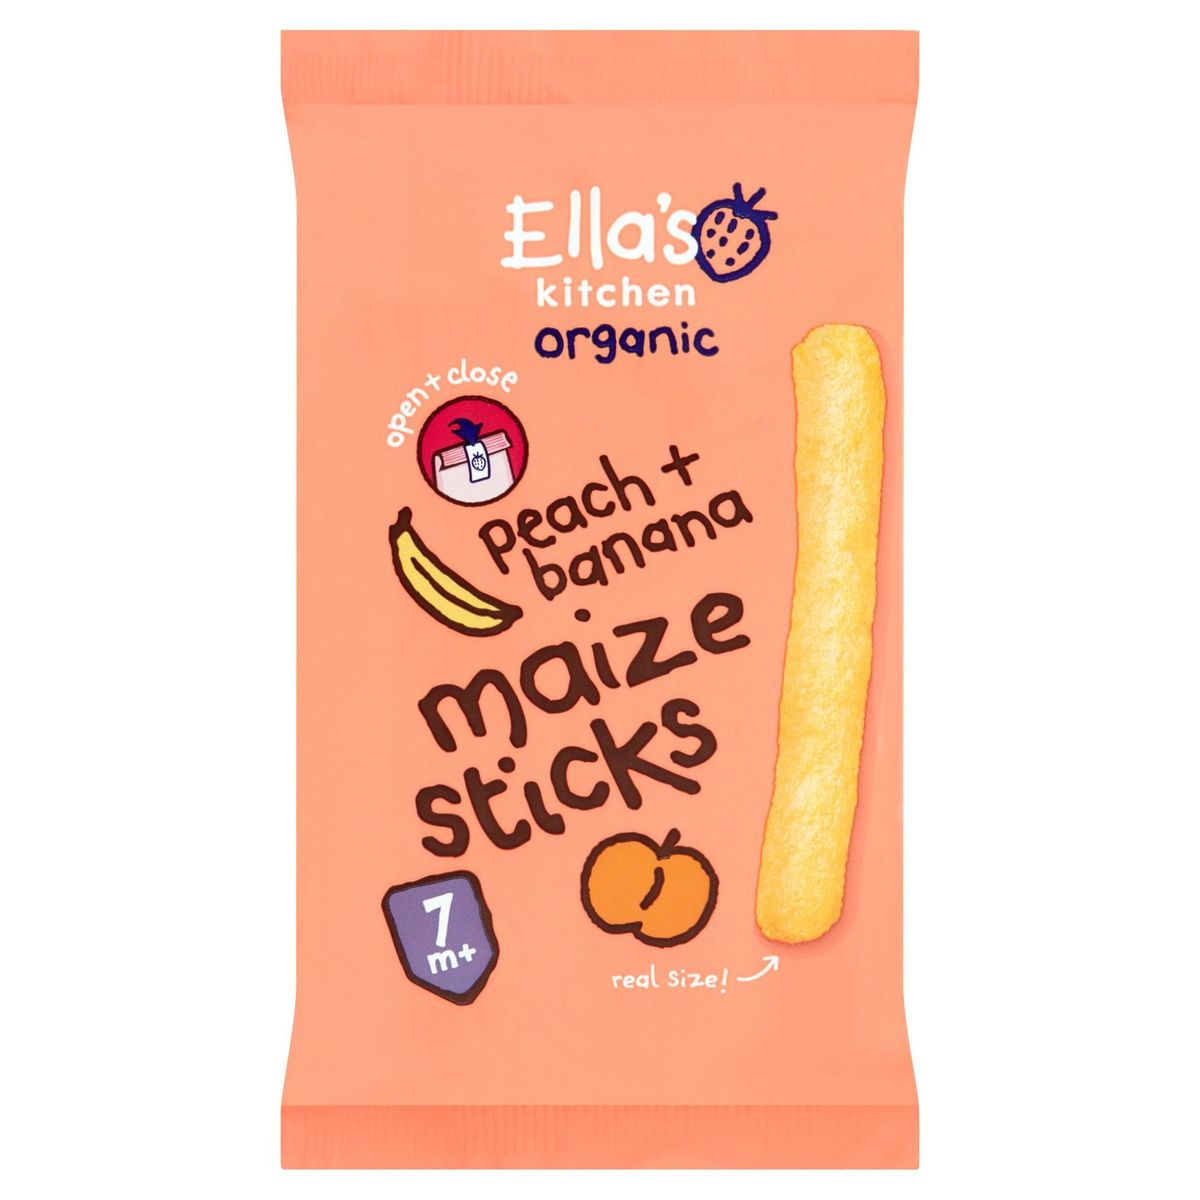 Ella's Kitchen Organic Peach + Banana Maize Sticks 7+ Maanden 16 g